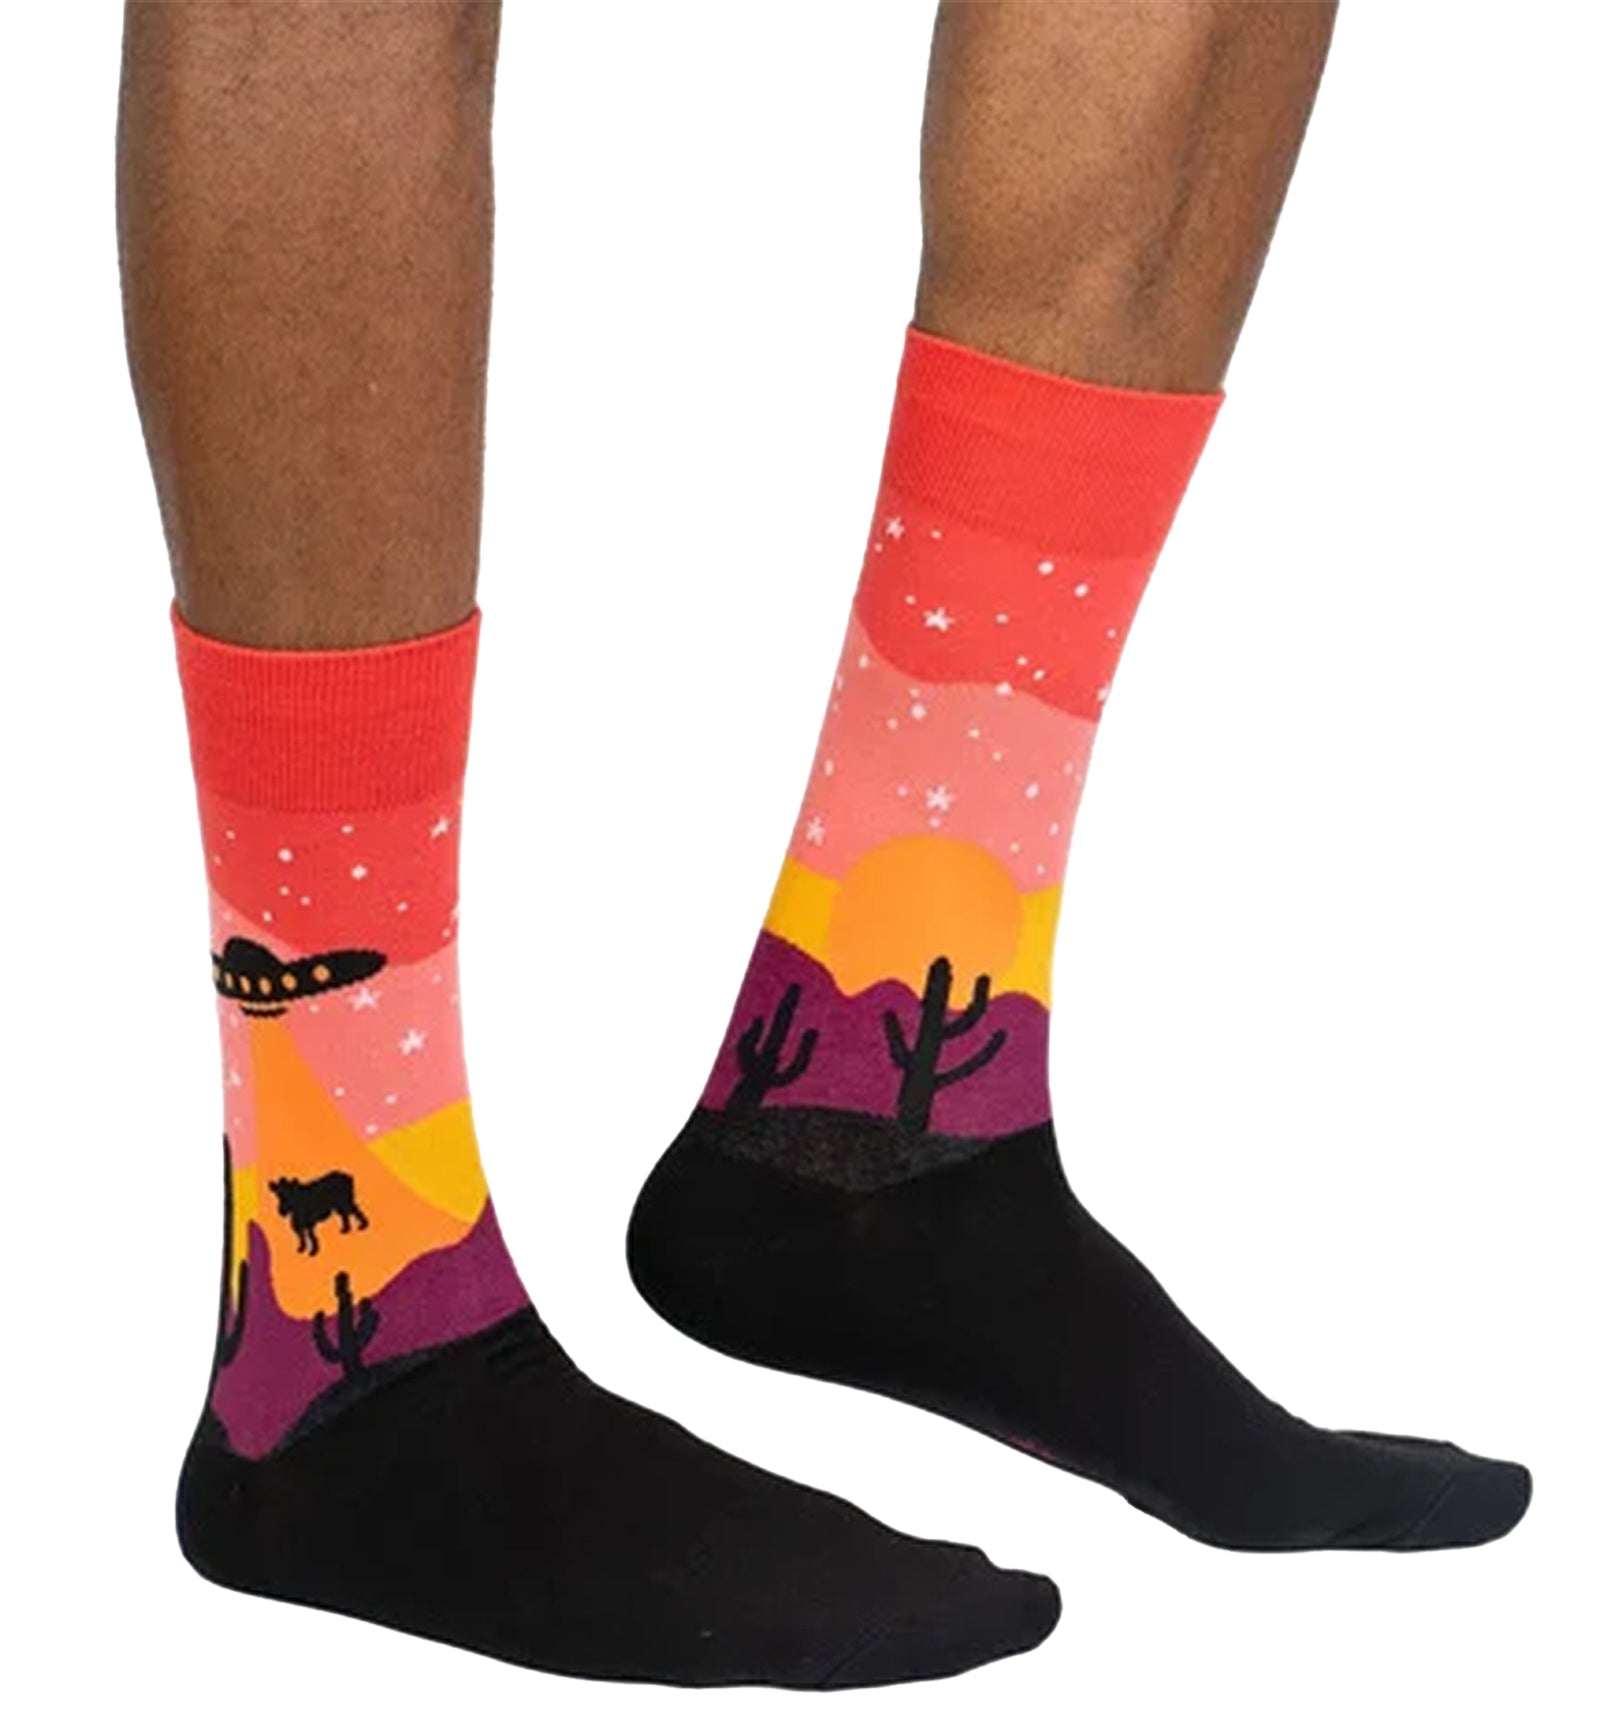 SOCK it to me Men's Crew Socks (mef0414),Area 51 - Area 51,One Size